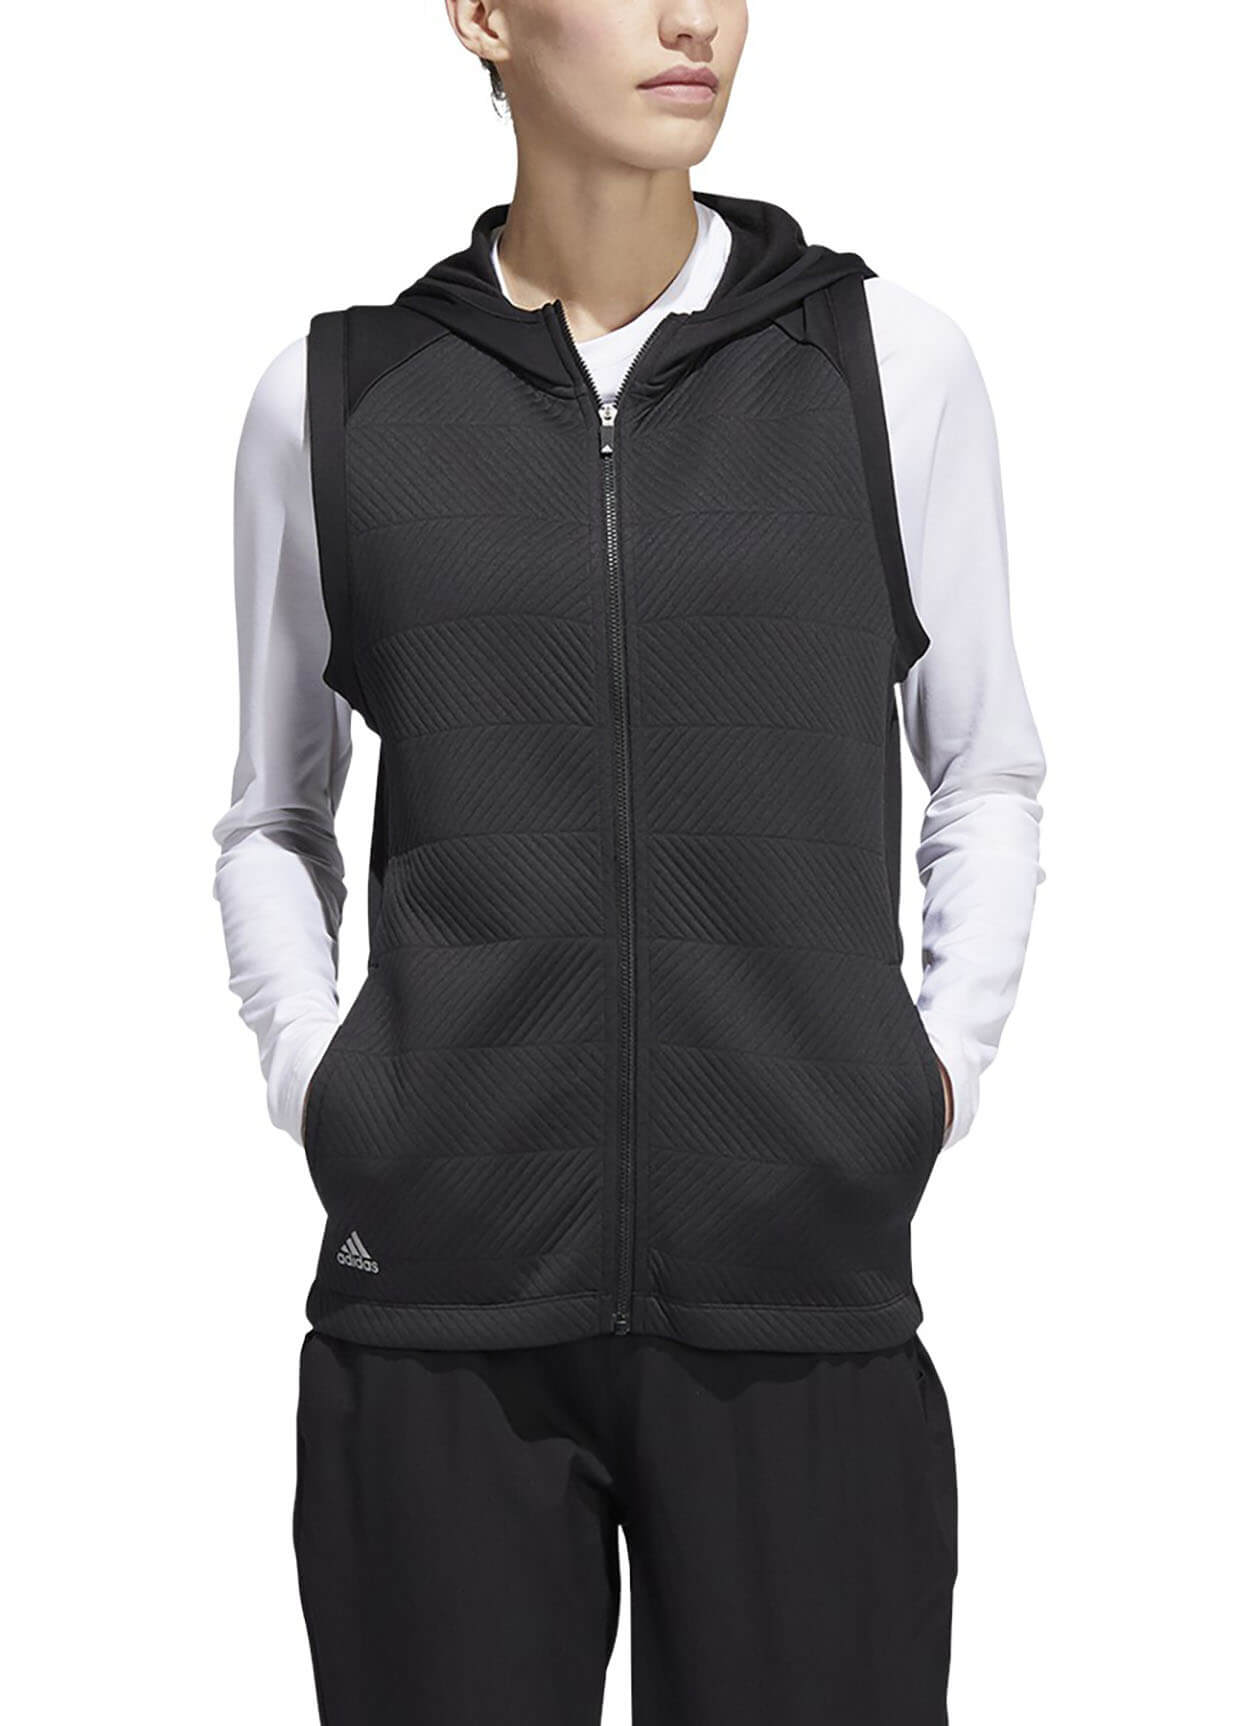 Adidas AD220 - Golf Women's Cold Ready Vest